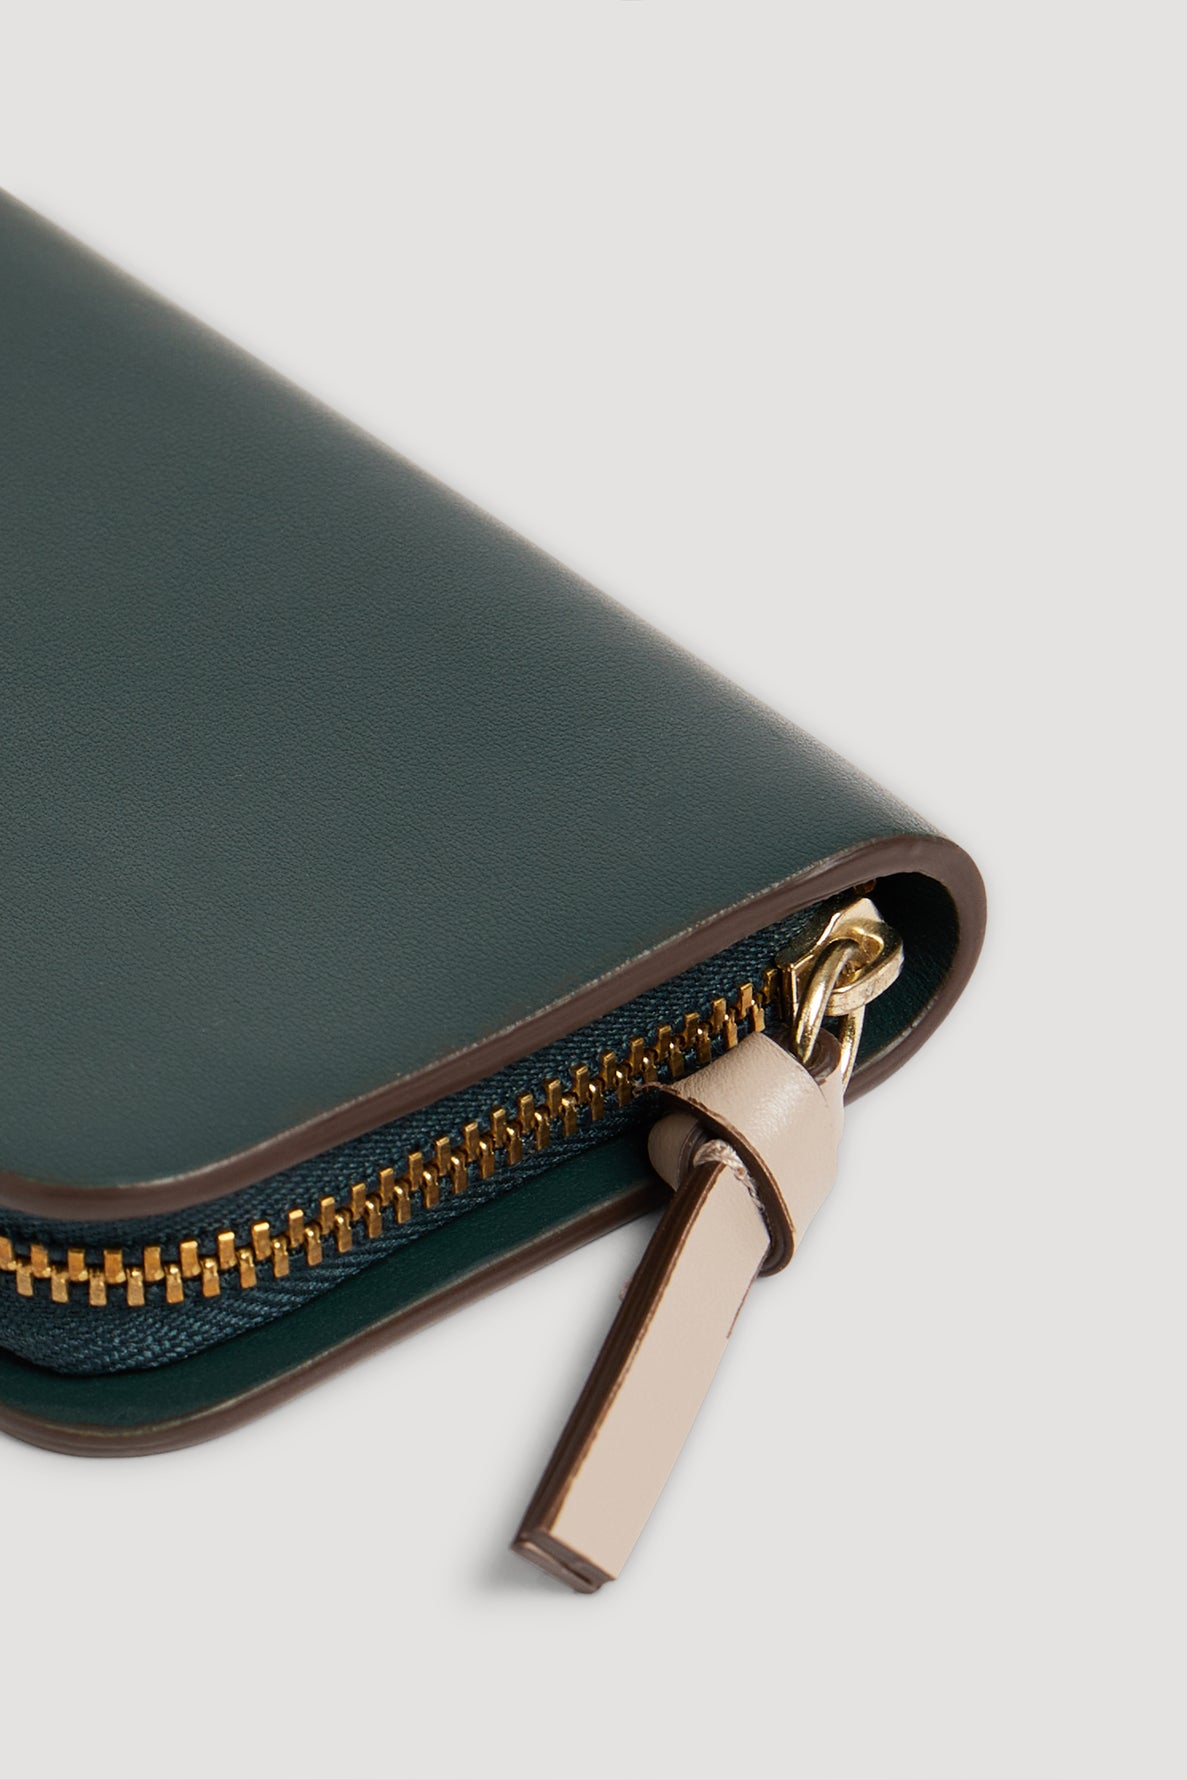 Green smooth leather wallet - MINI WALLET | Gerard Darel